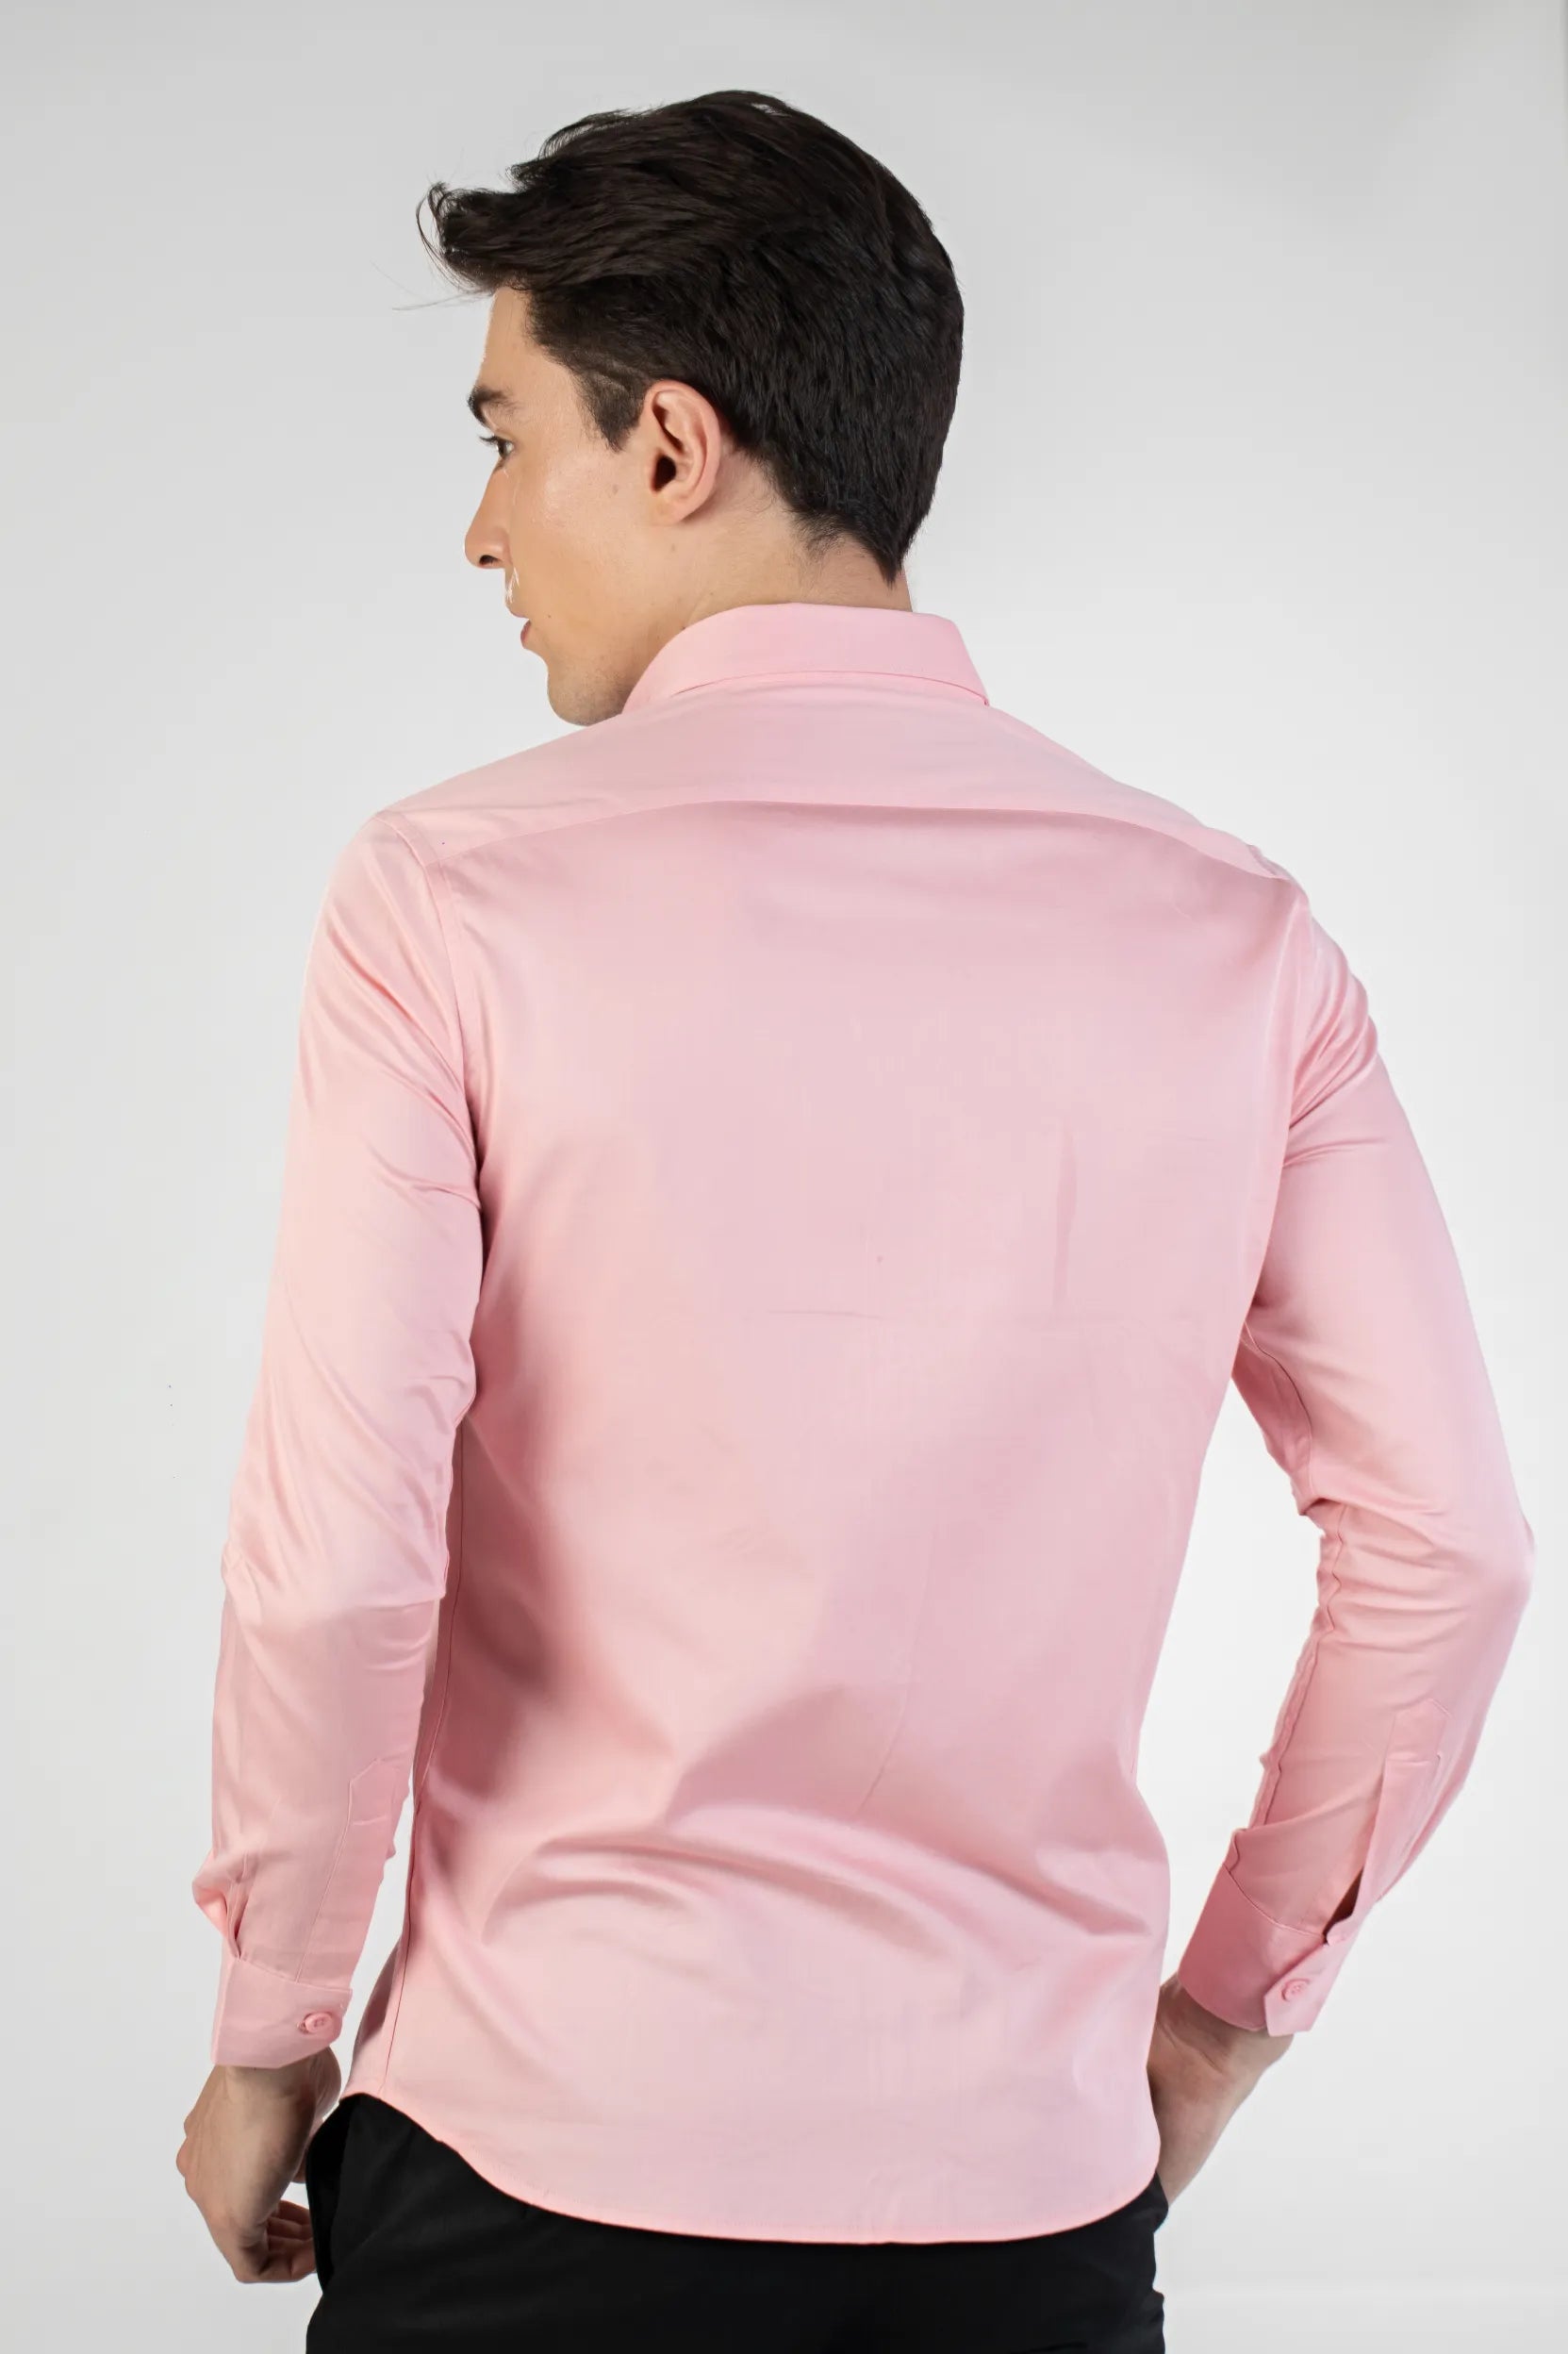 Buy Premium Satin Stretch Shirt Online.